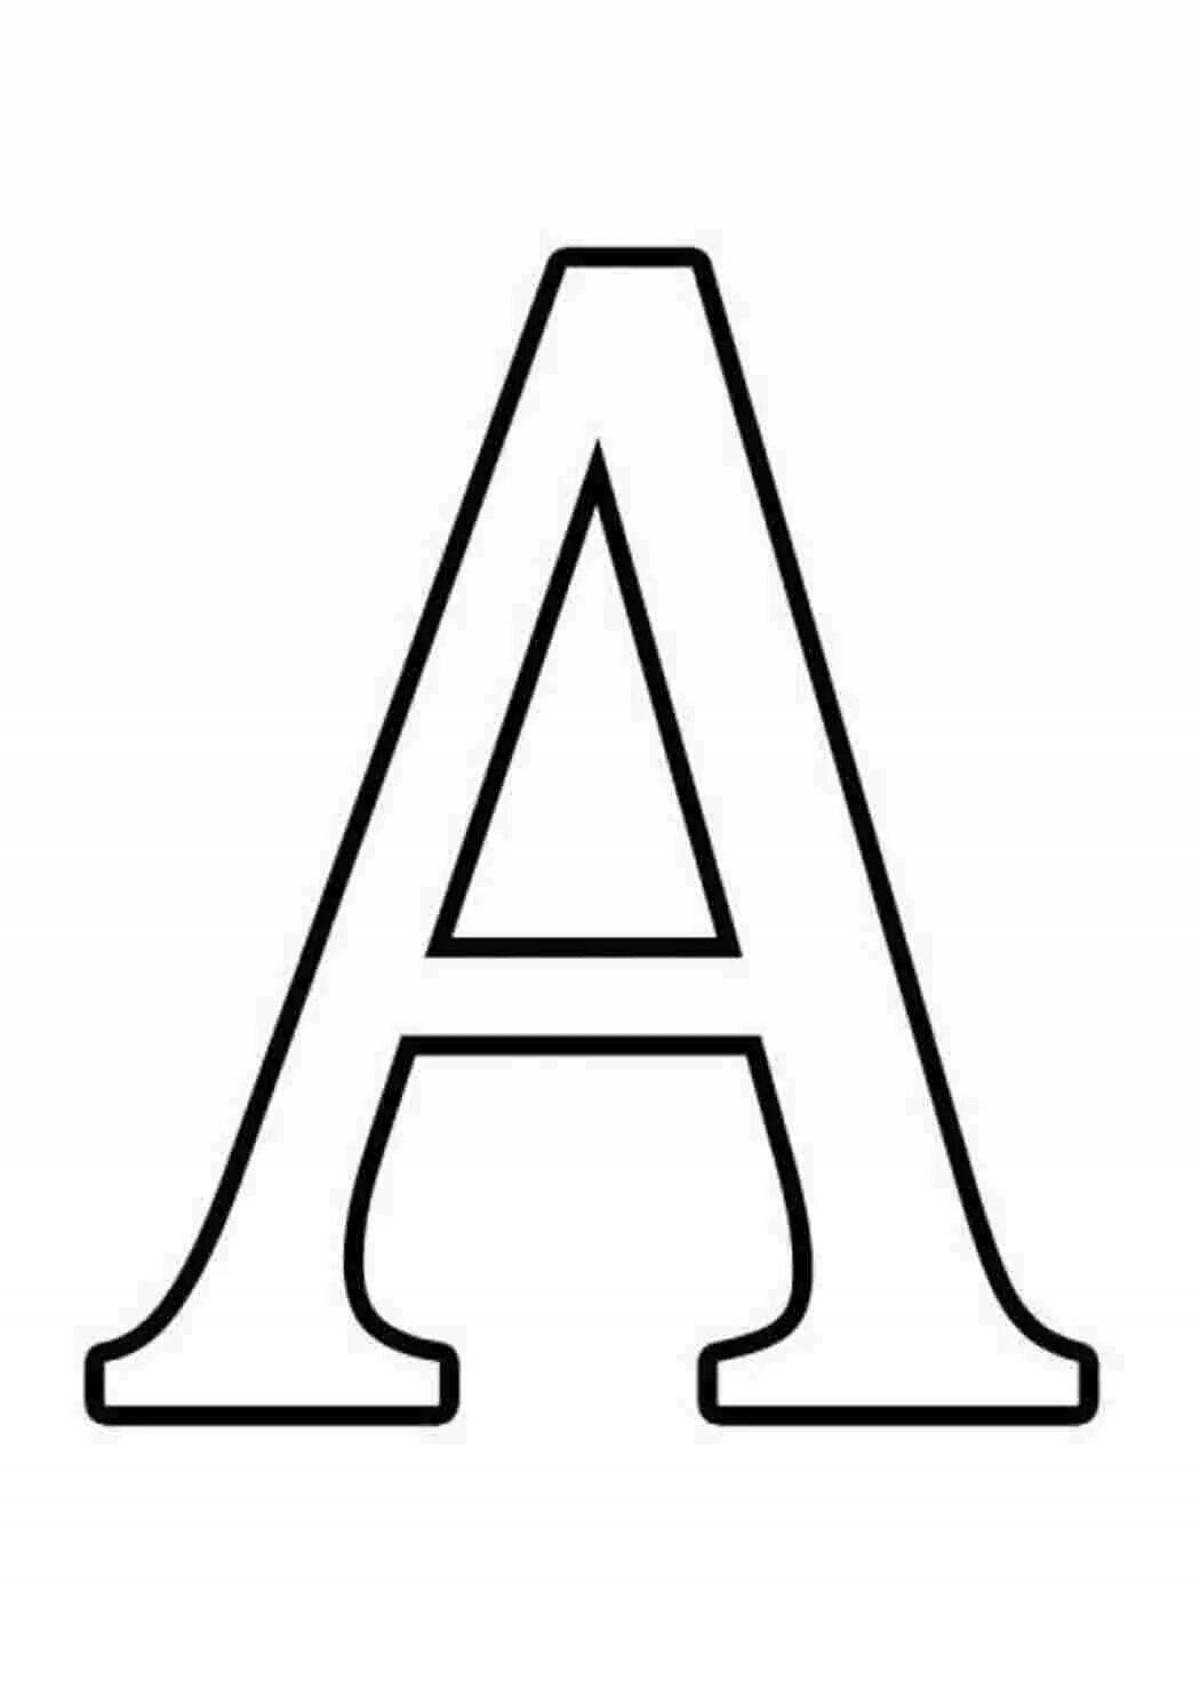 Буквы с т е н а. Буквы для распечатки. Буквы формата а4. Алфавит и буквы. Контур букв.